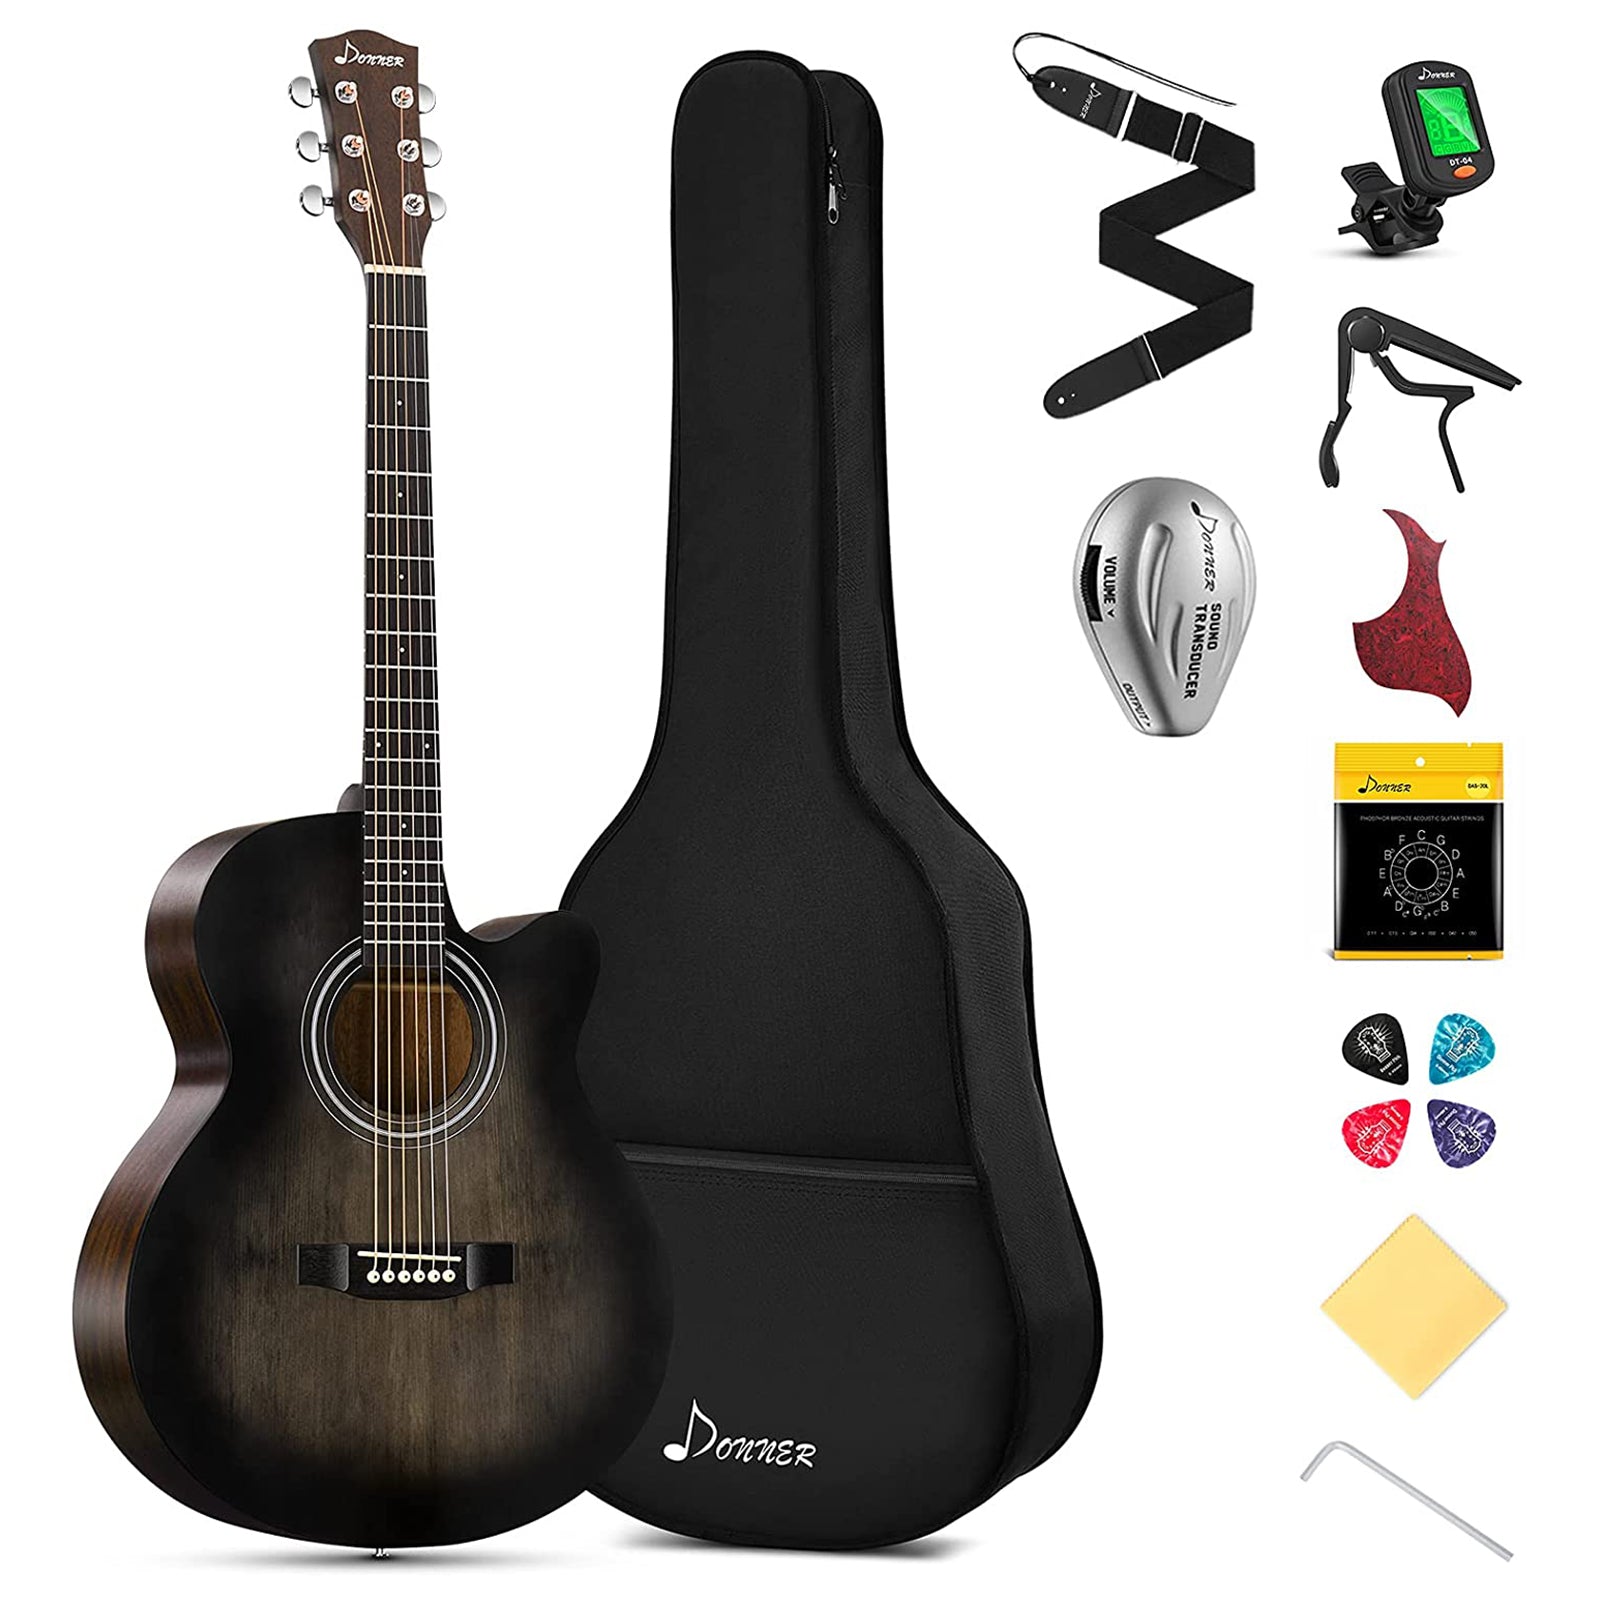 

Donner DAJ-110CD Cutaway 40-Inch Acoustic Guitar Starter Bundle Right Handed, Black